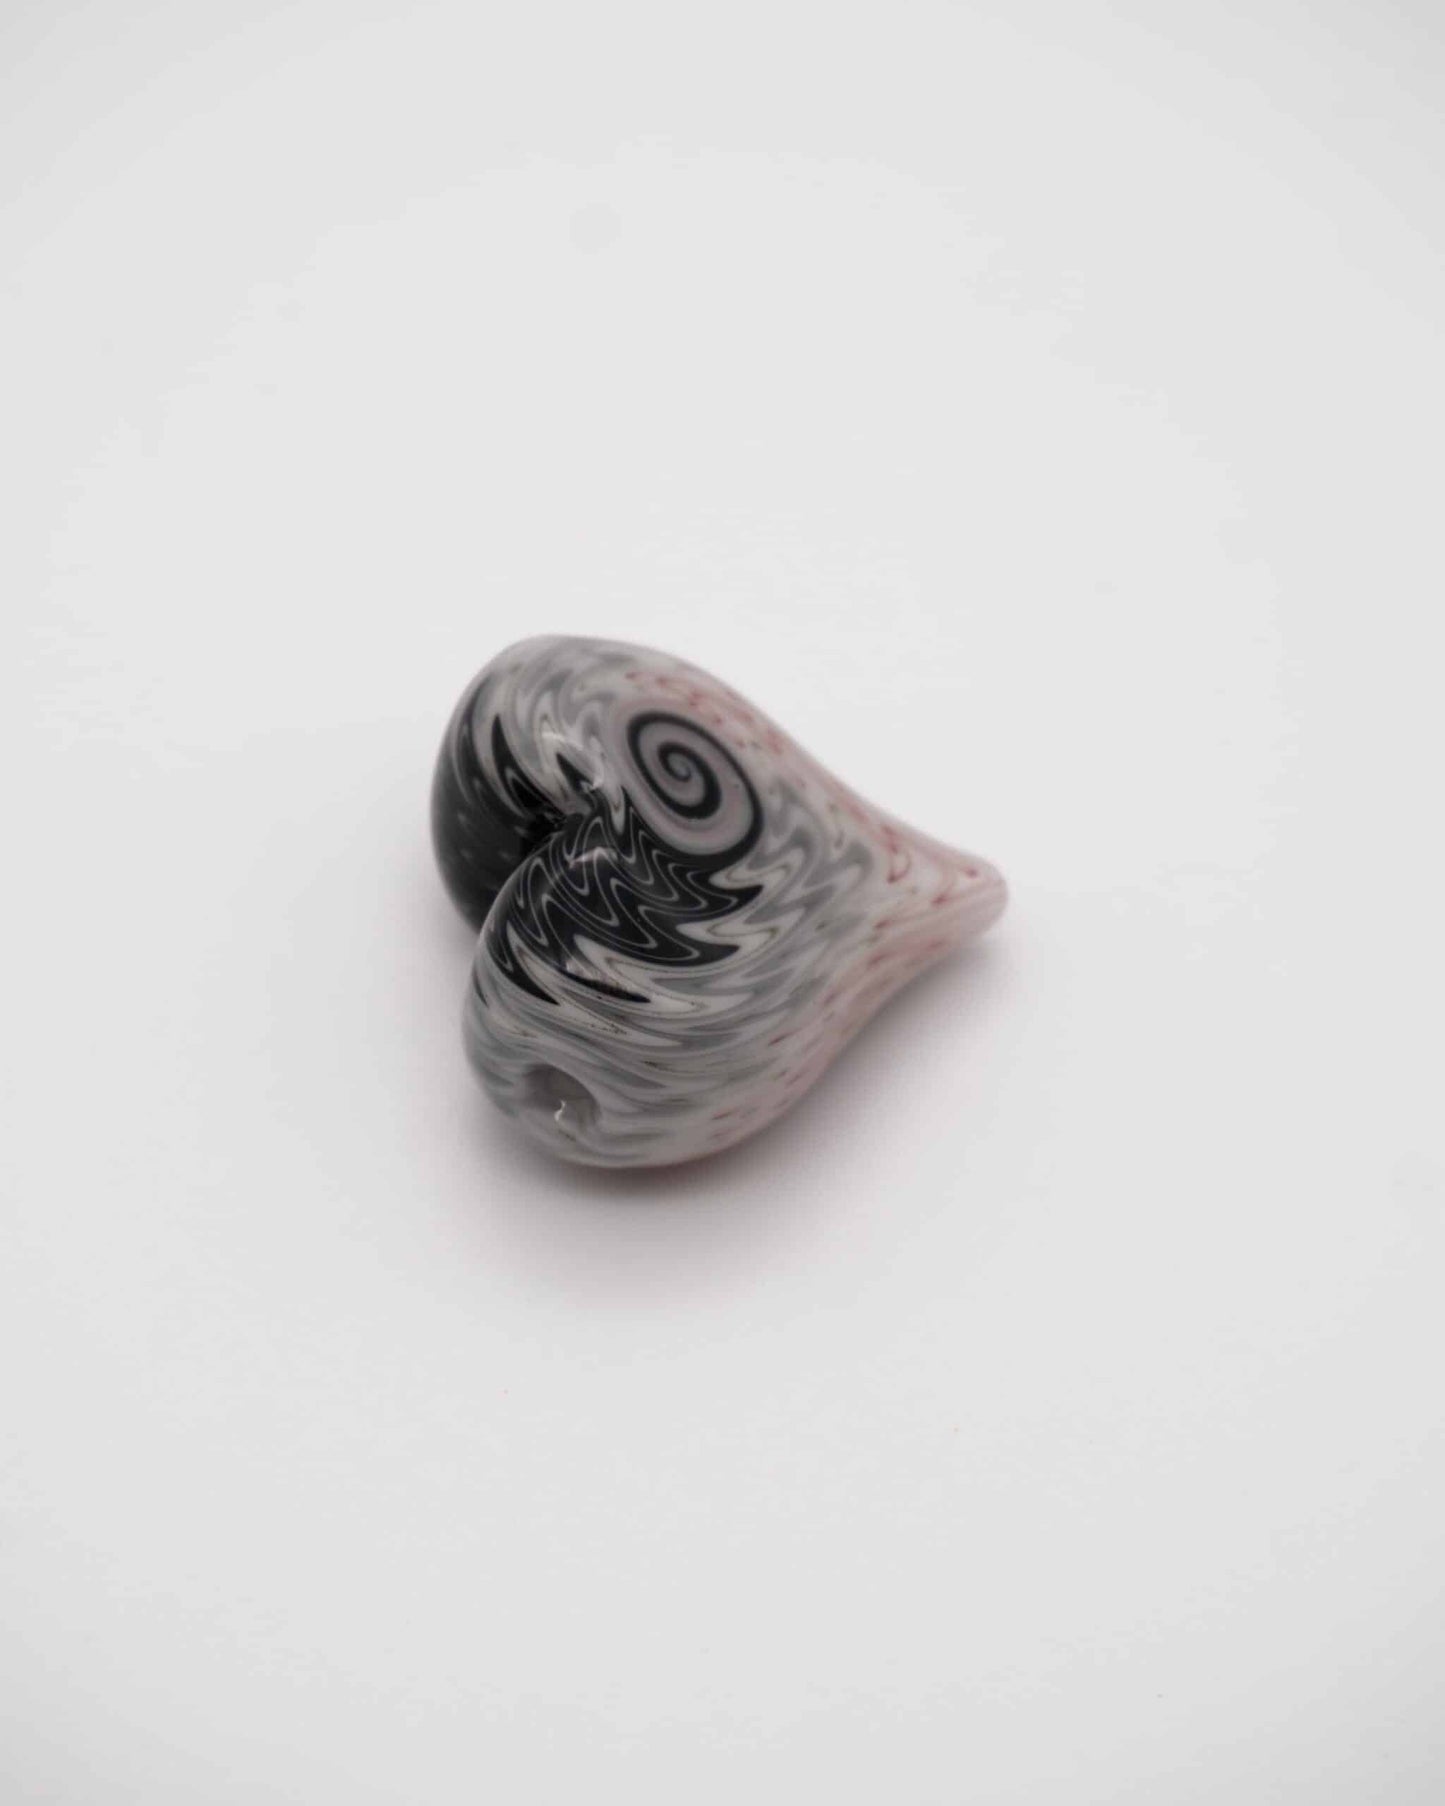 heady glass pendant - Black / White Heart Pendant by NateyLove